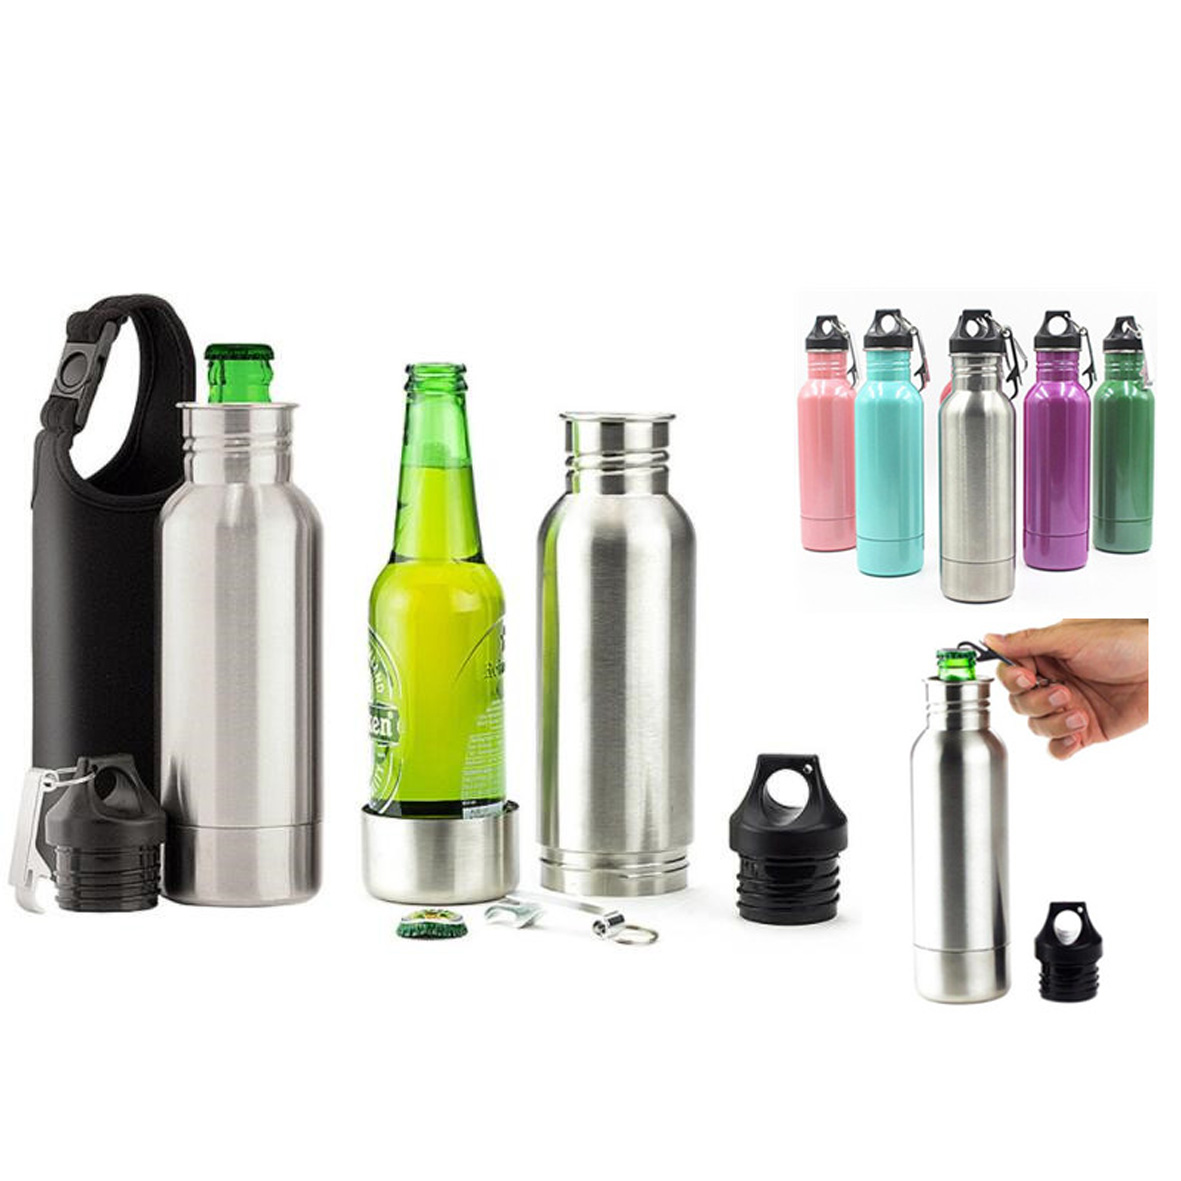 GL-ELY1127 12oz Detachable Stainless Steel Bottle Keeper with Bottle Opener